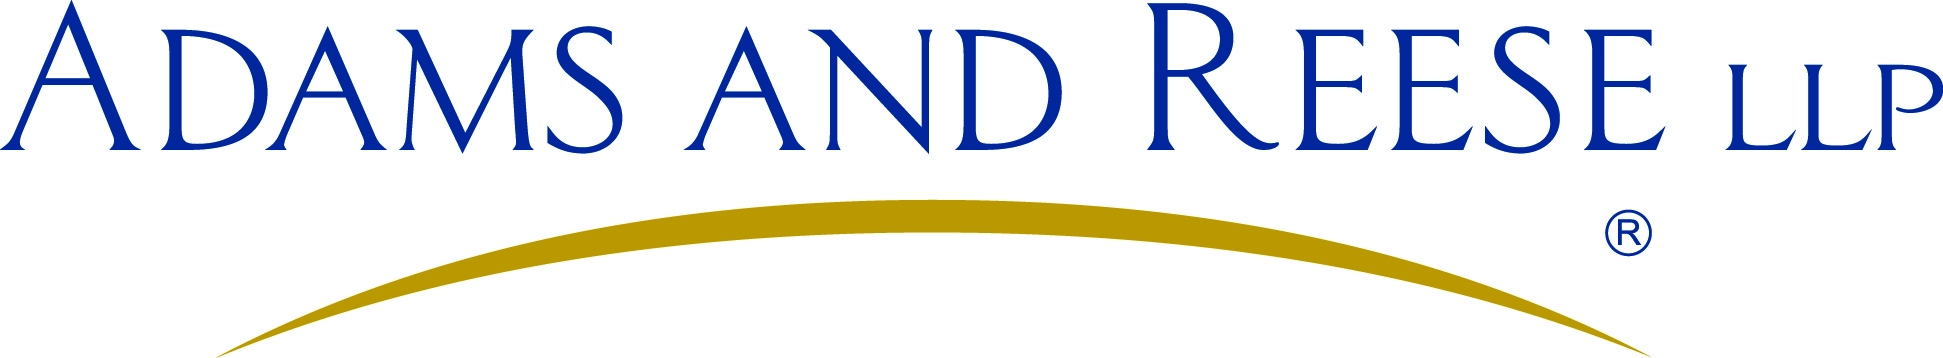 Adams and Reese LLP logo